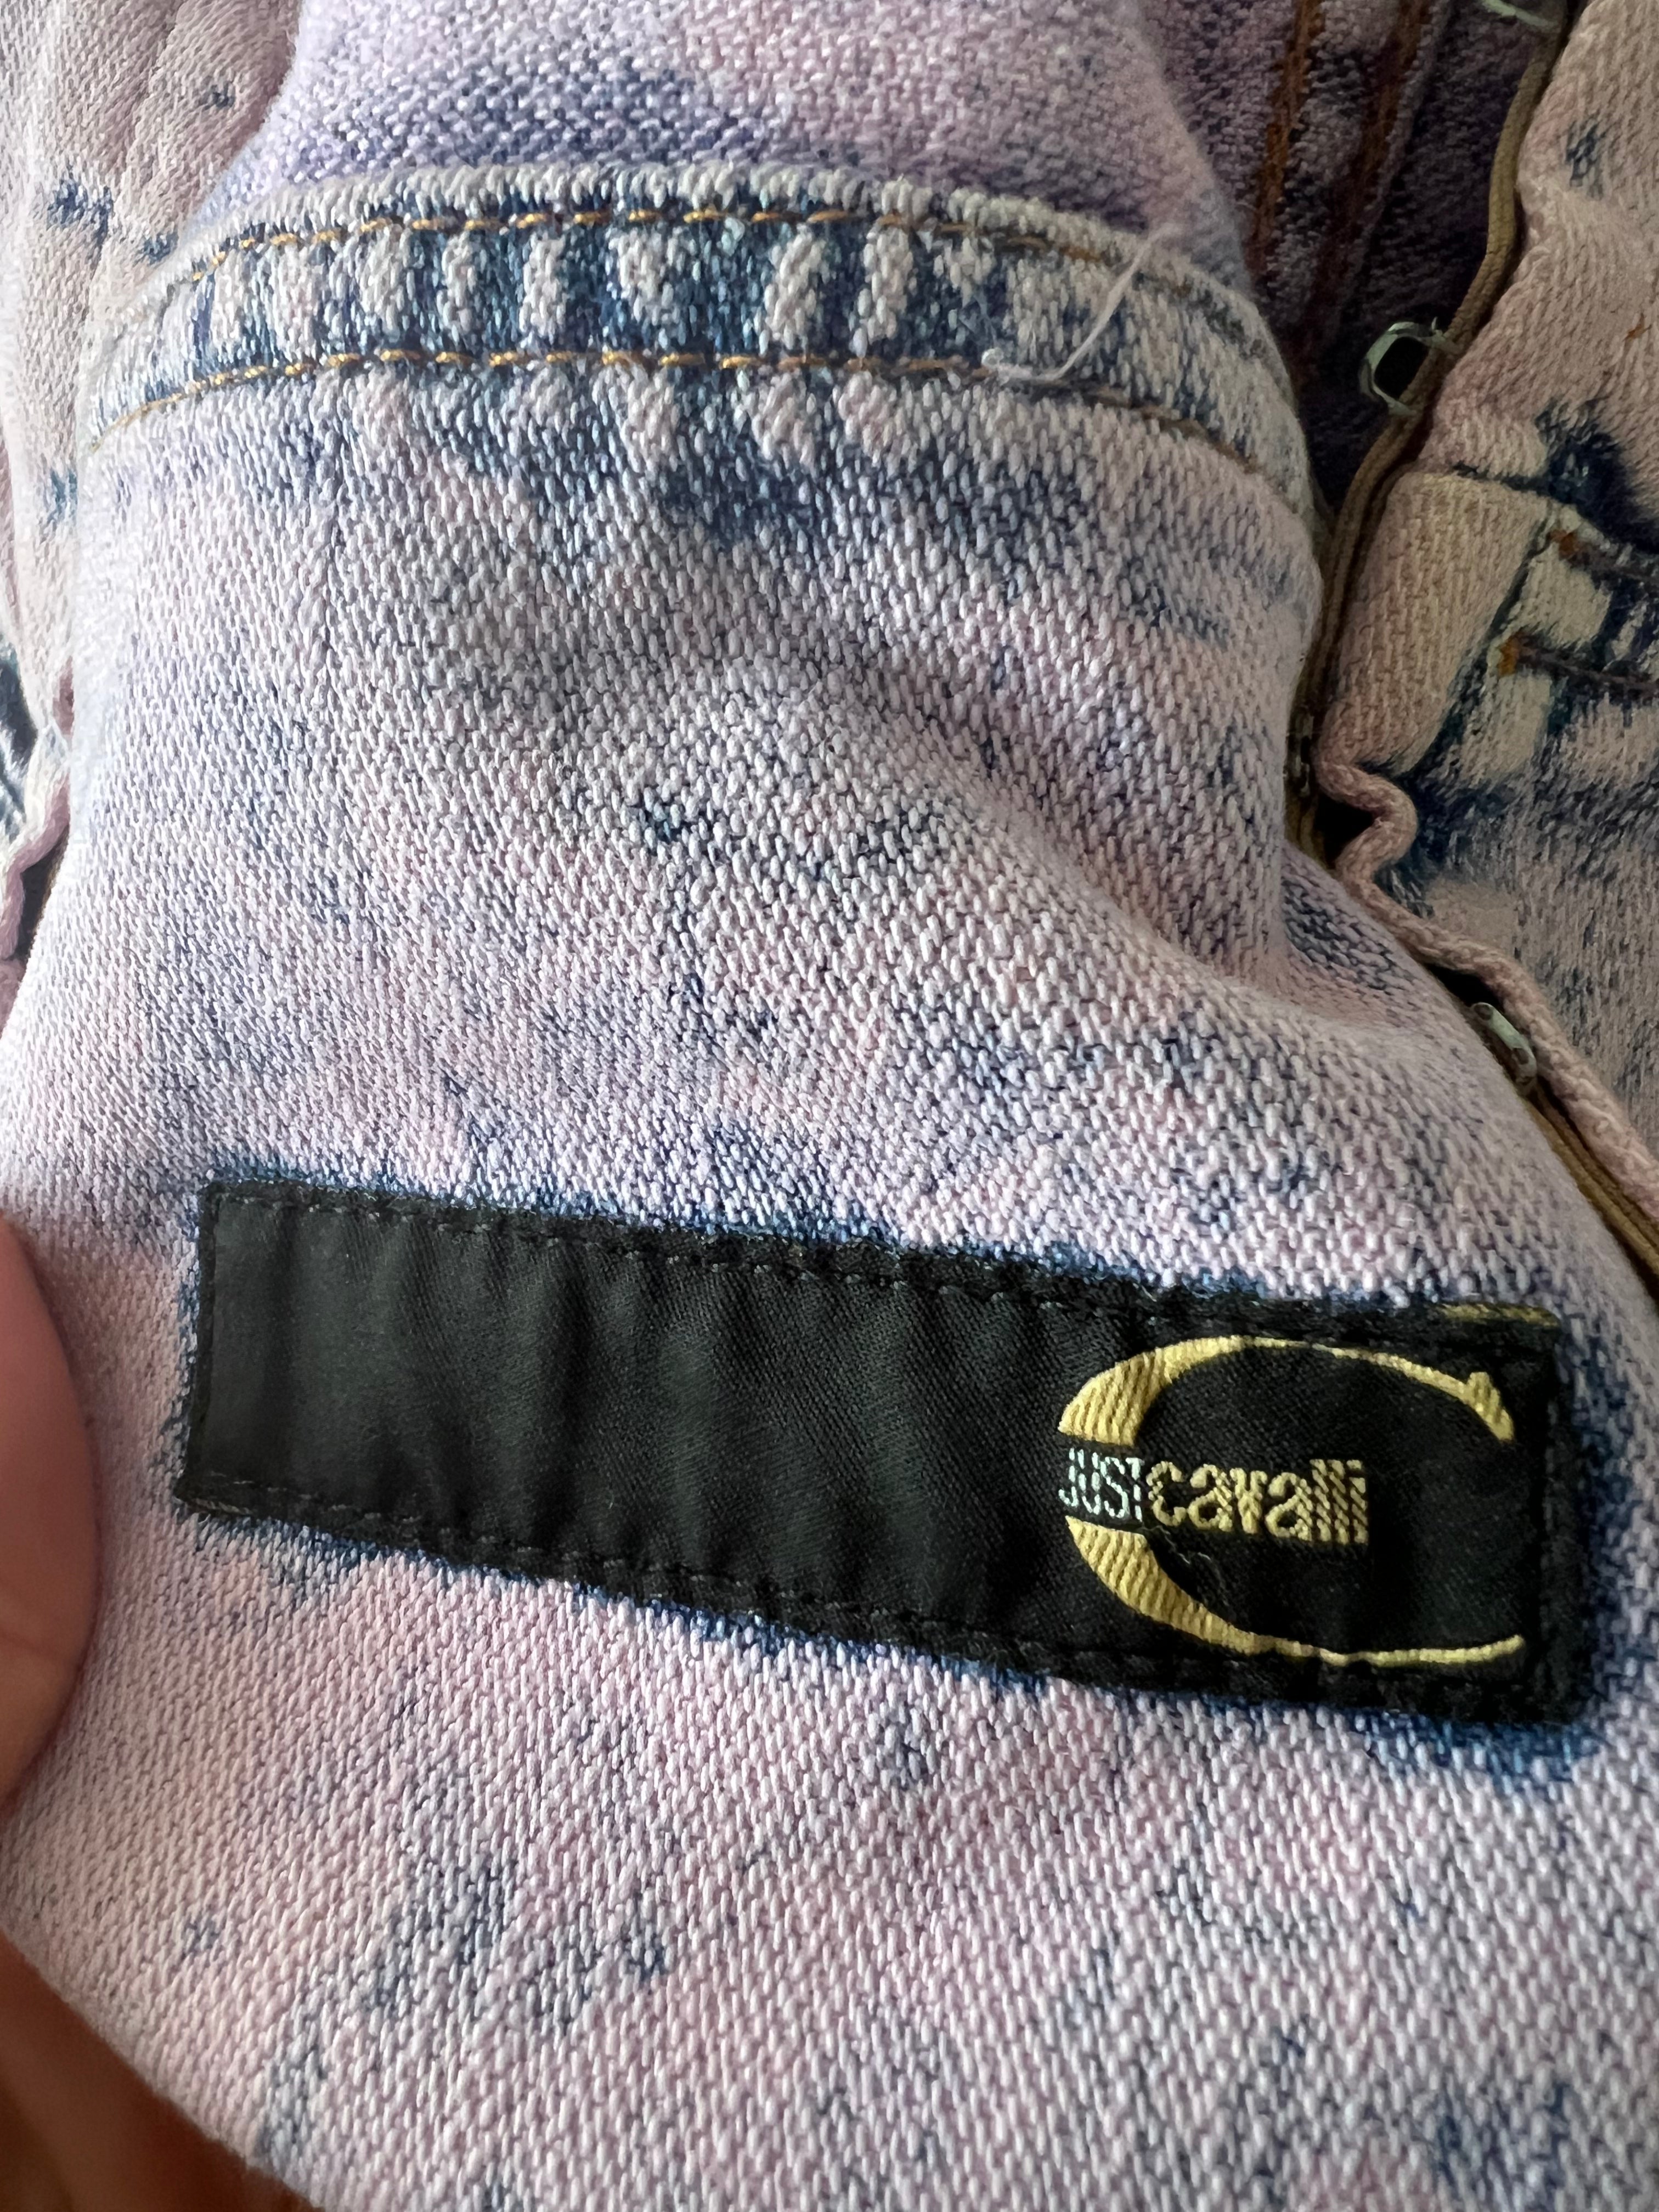 Roberto Cavalli for Just Cavalli Washed Denim Jacket